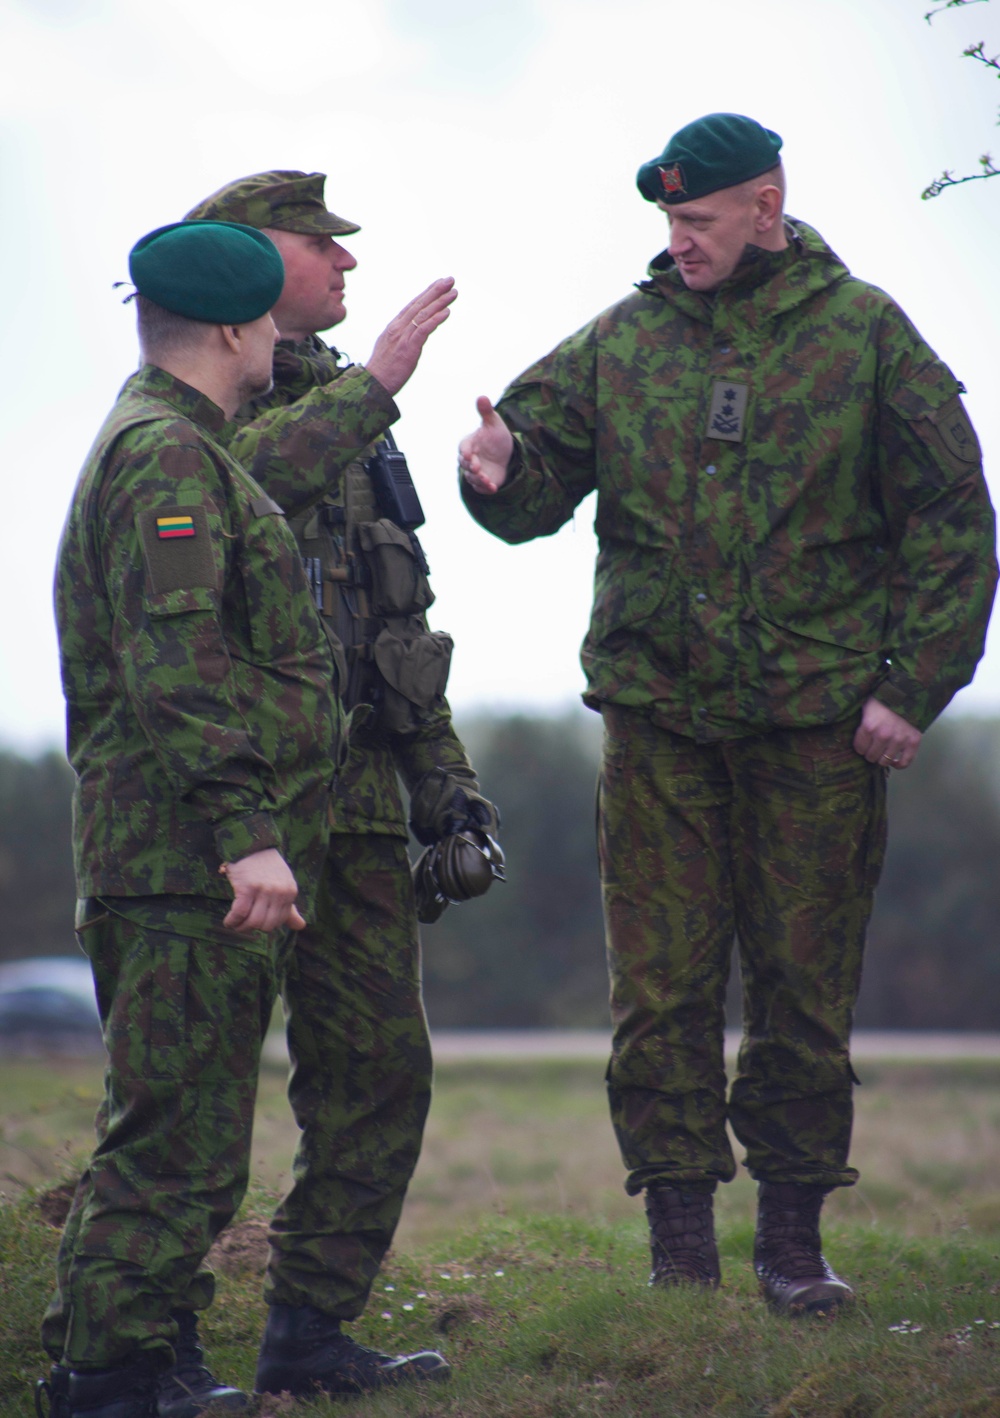 Maj. Gen. Leika speaks to soldiers about training